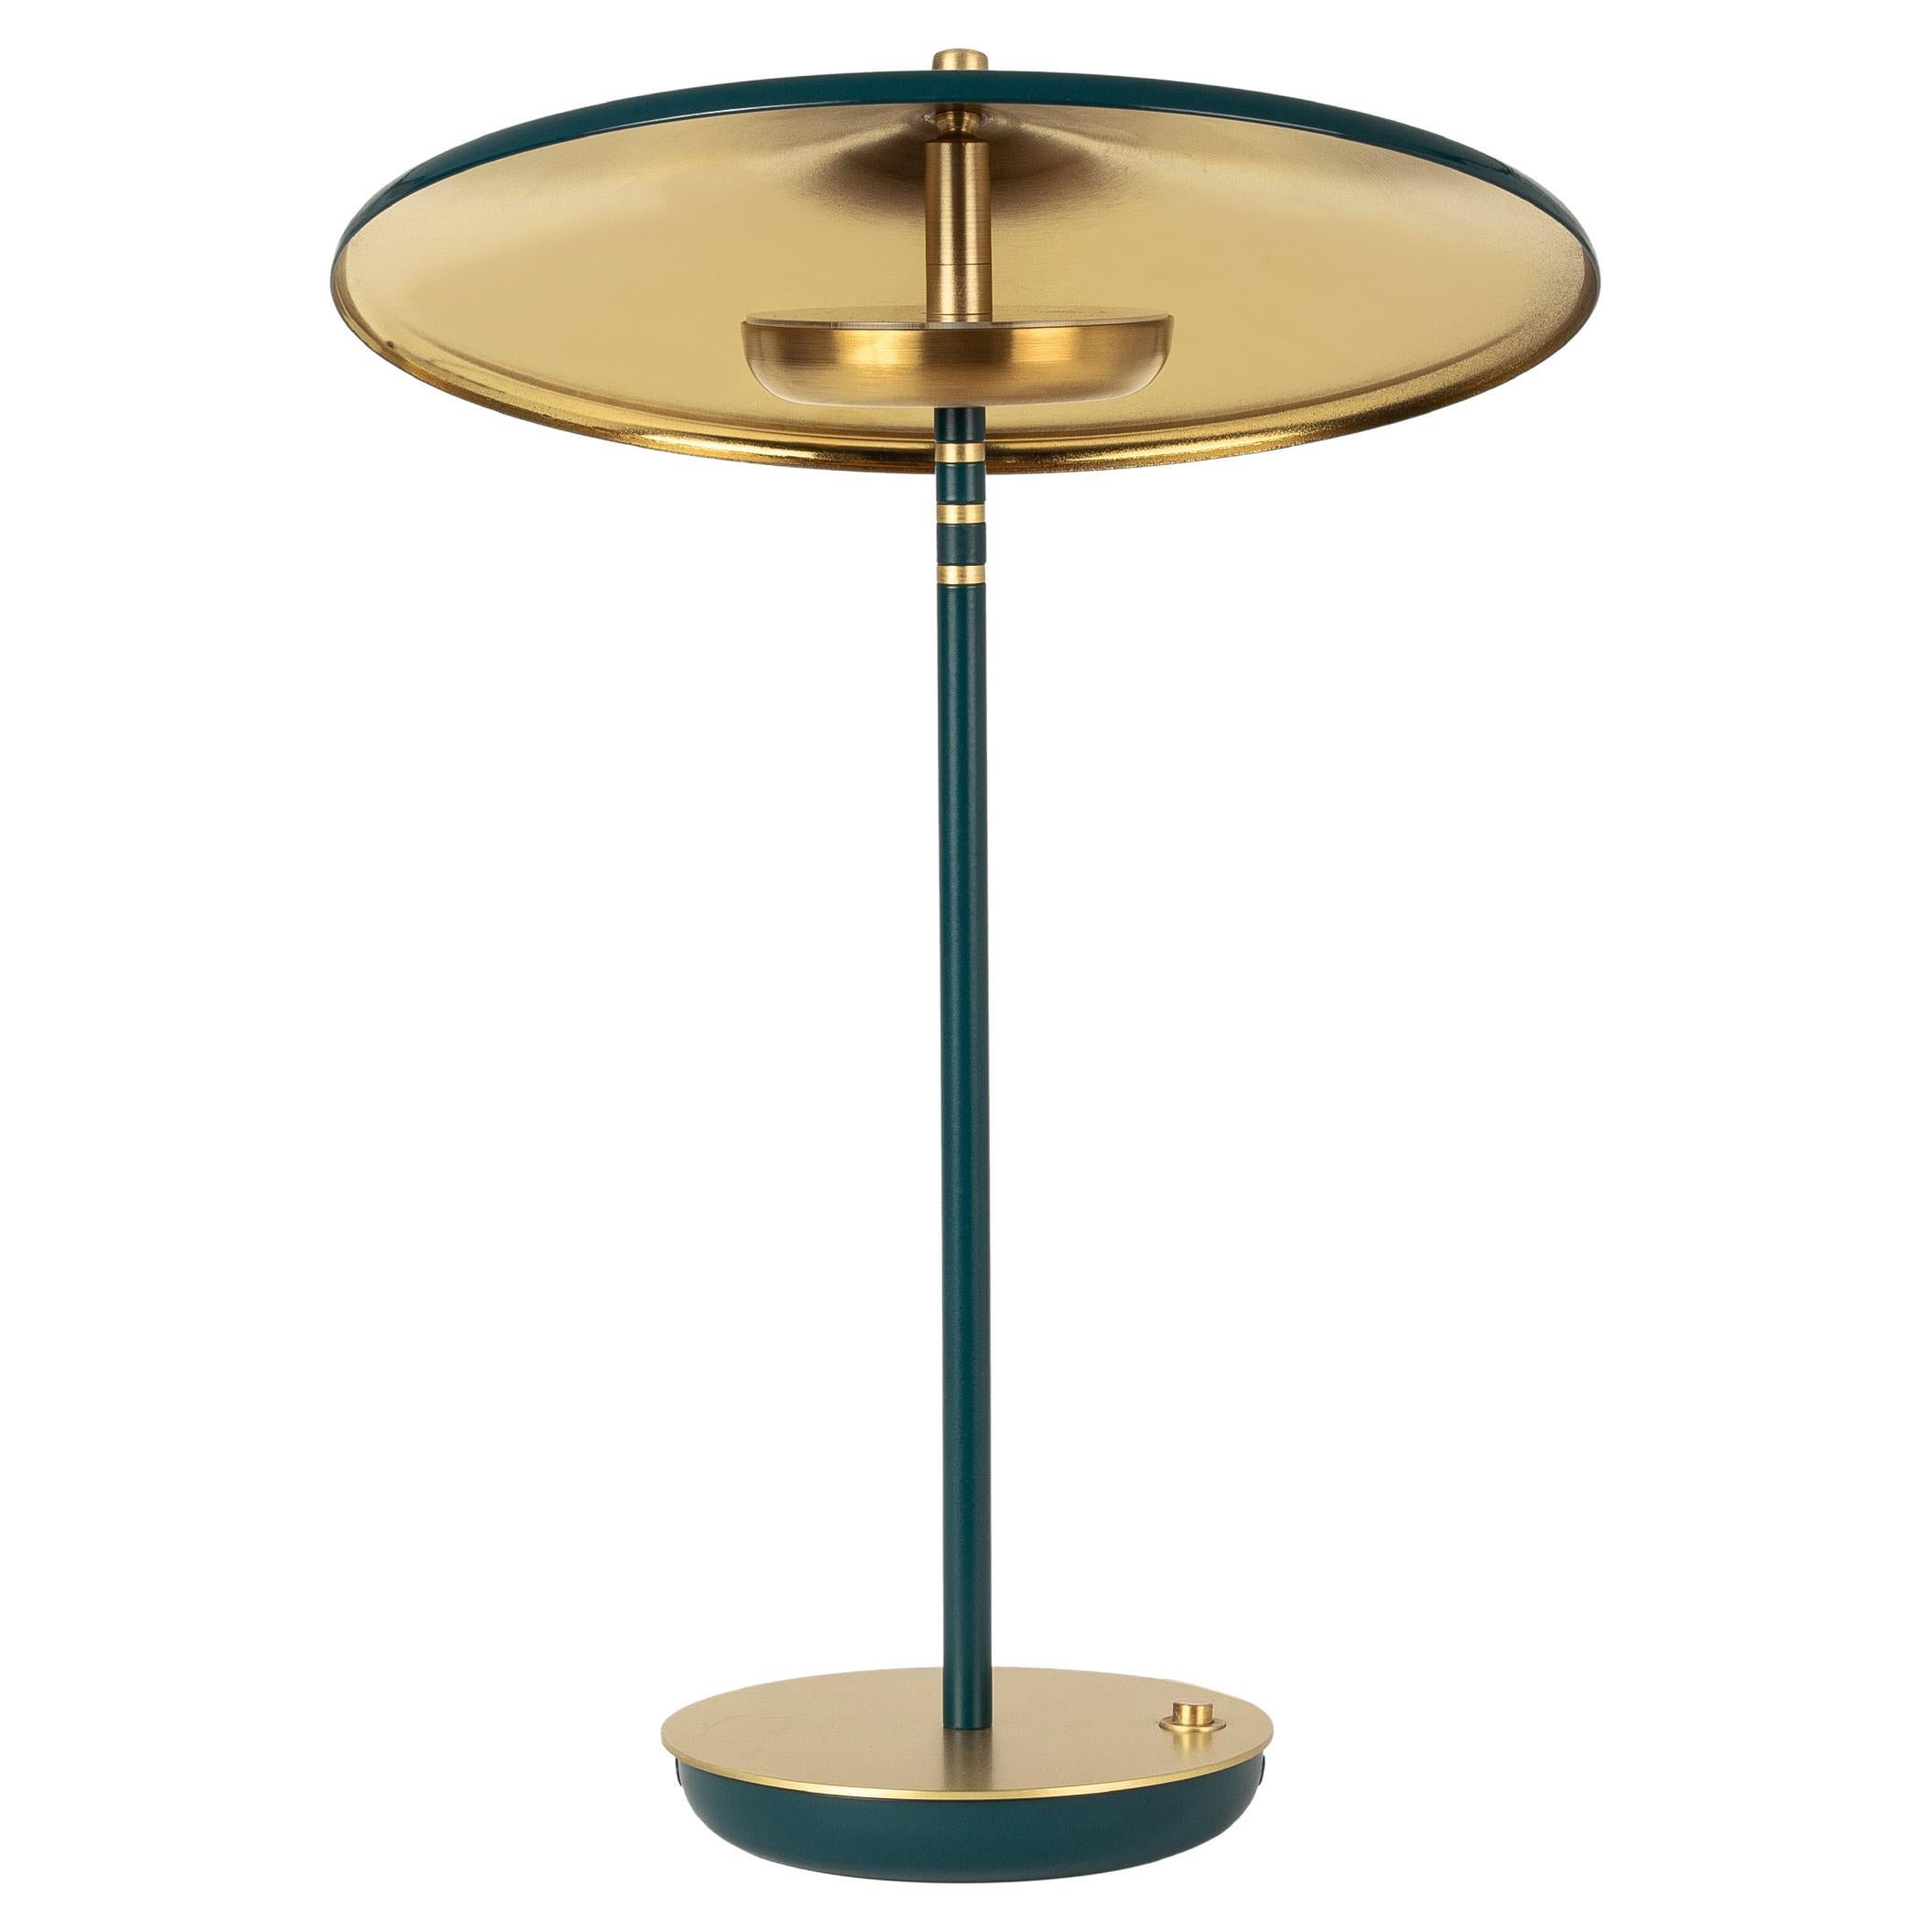 Minimalist Artist Table Lamp, Gold and Sacramento Green, Tilting Shader